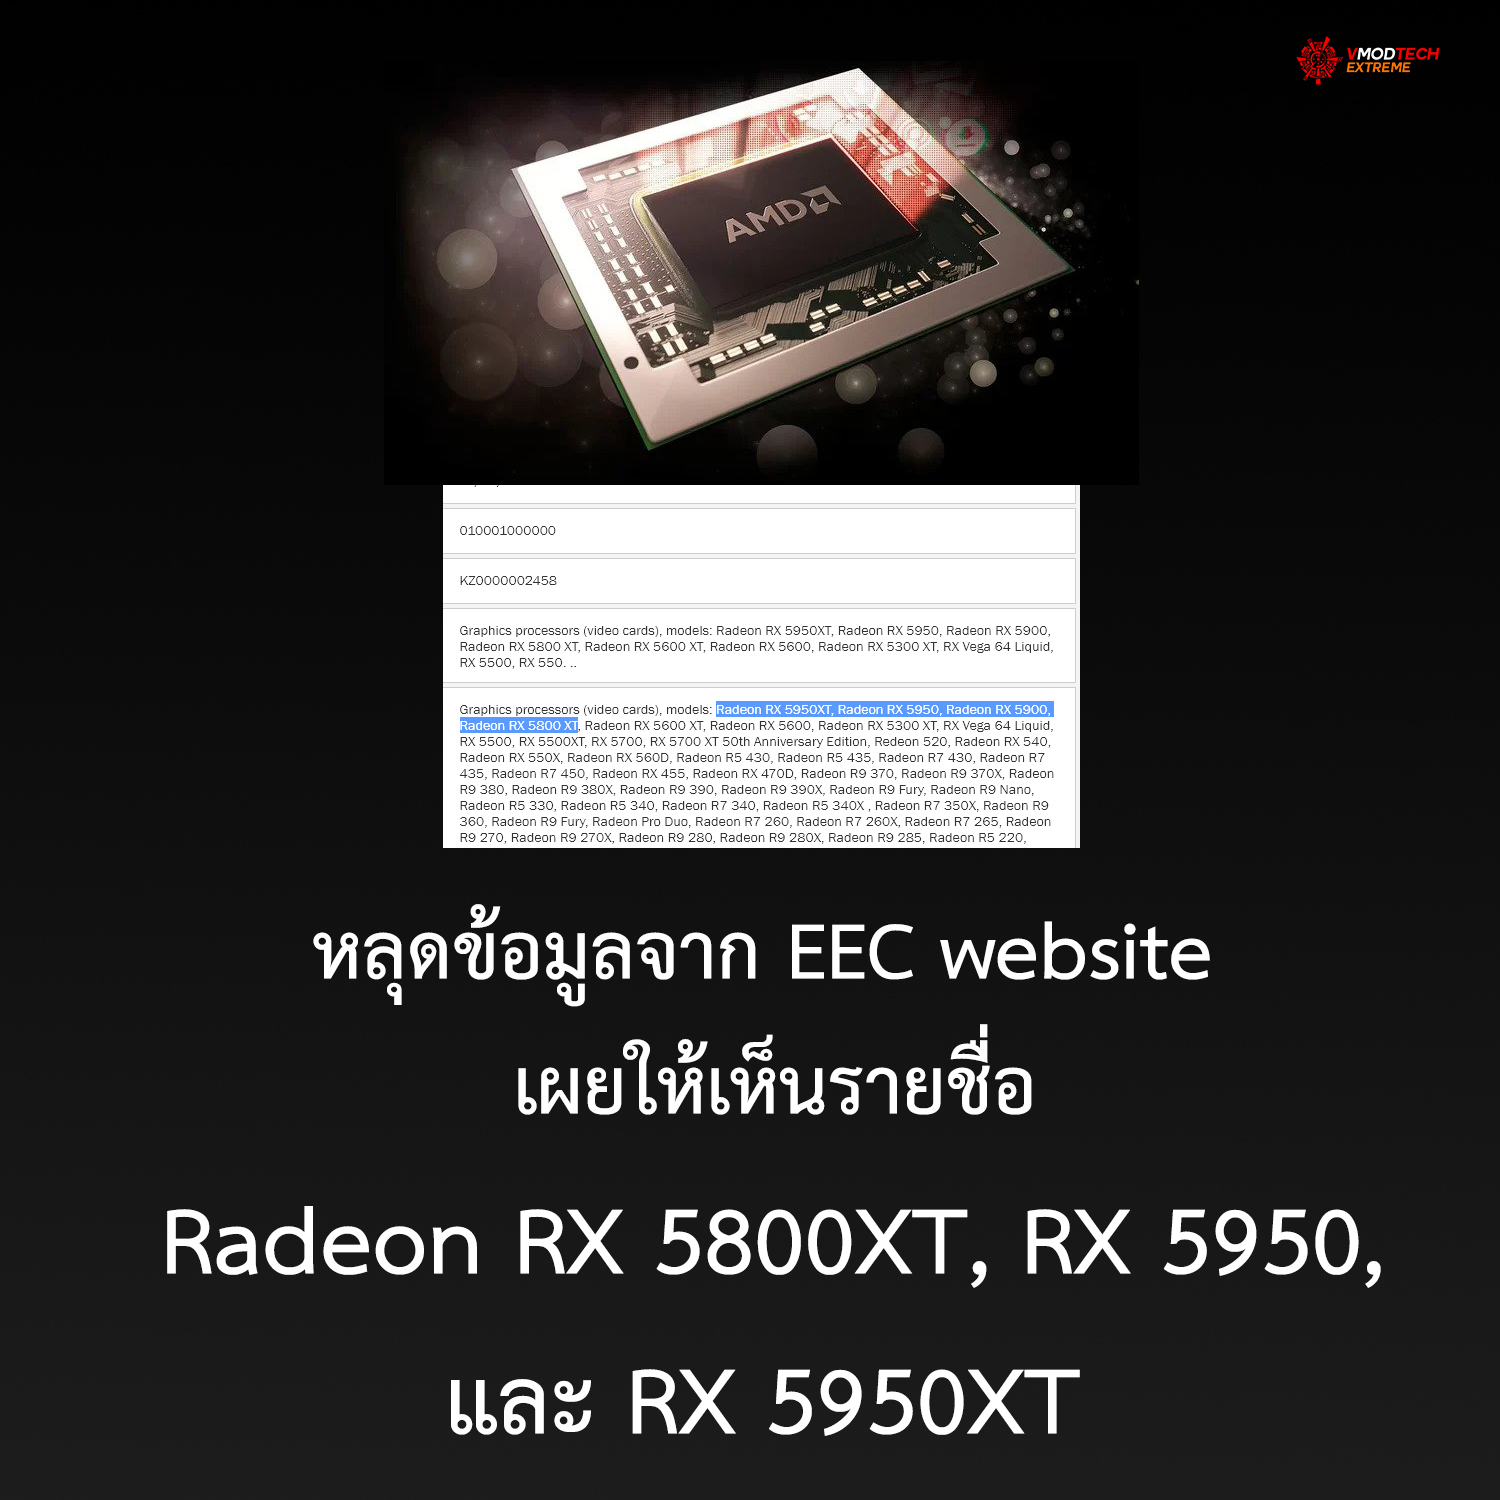 radeon rx 5800xt rx 5950 rx 5950xt1 หลุดข้อมูลจาก EEC website เผยให้เห็นรายชื่อ Radeon RX 5800XT, RX 5950, และ RX 5950XT 